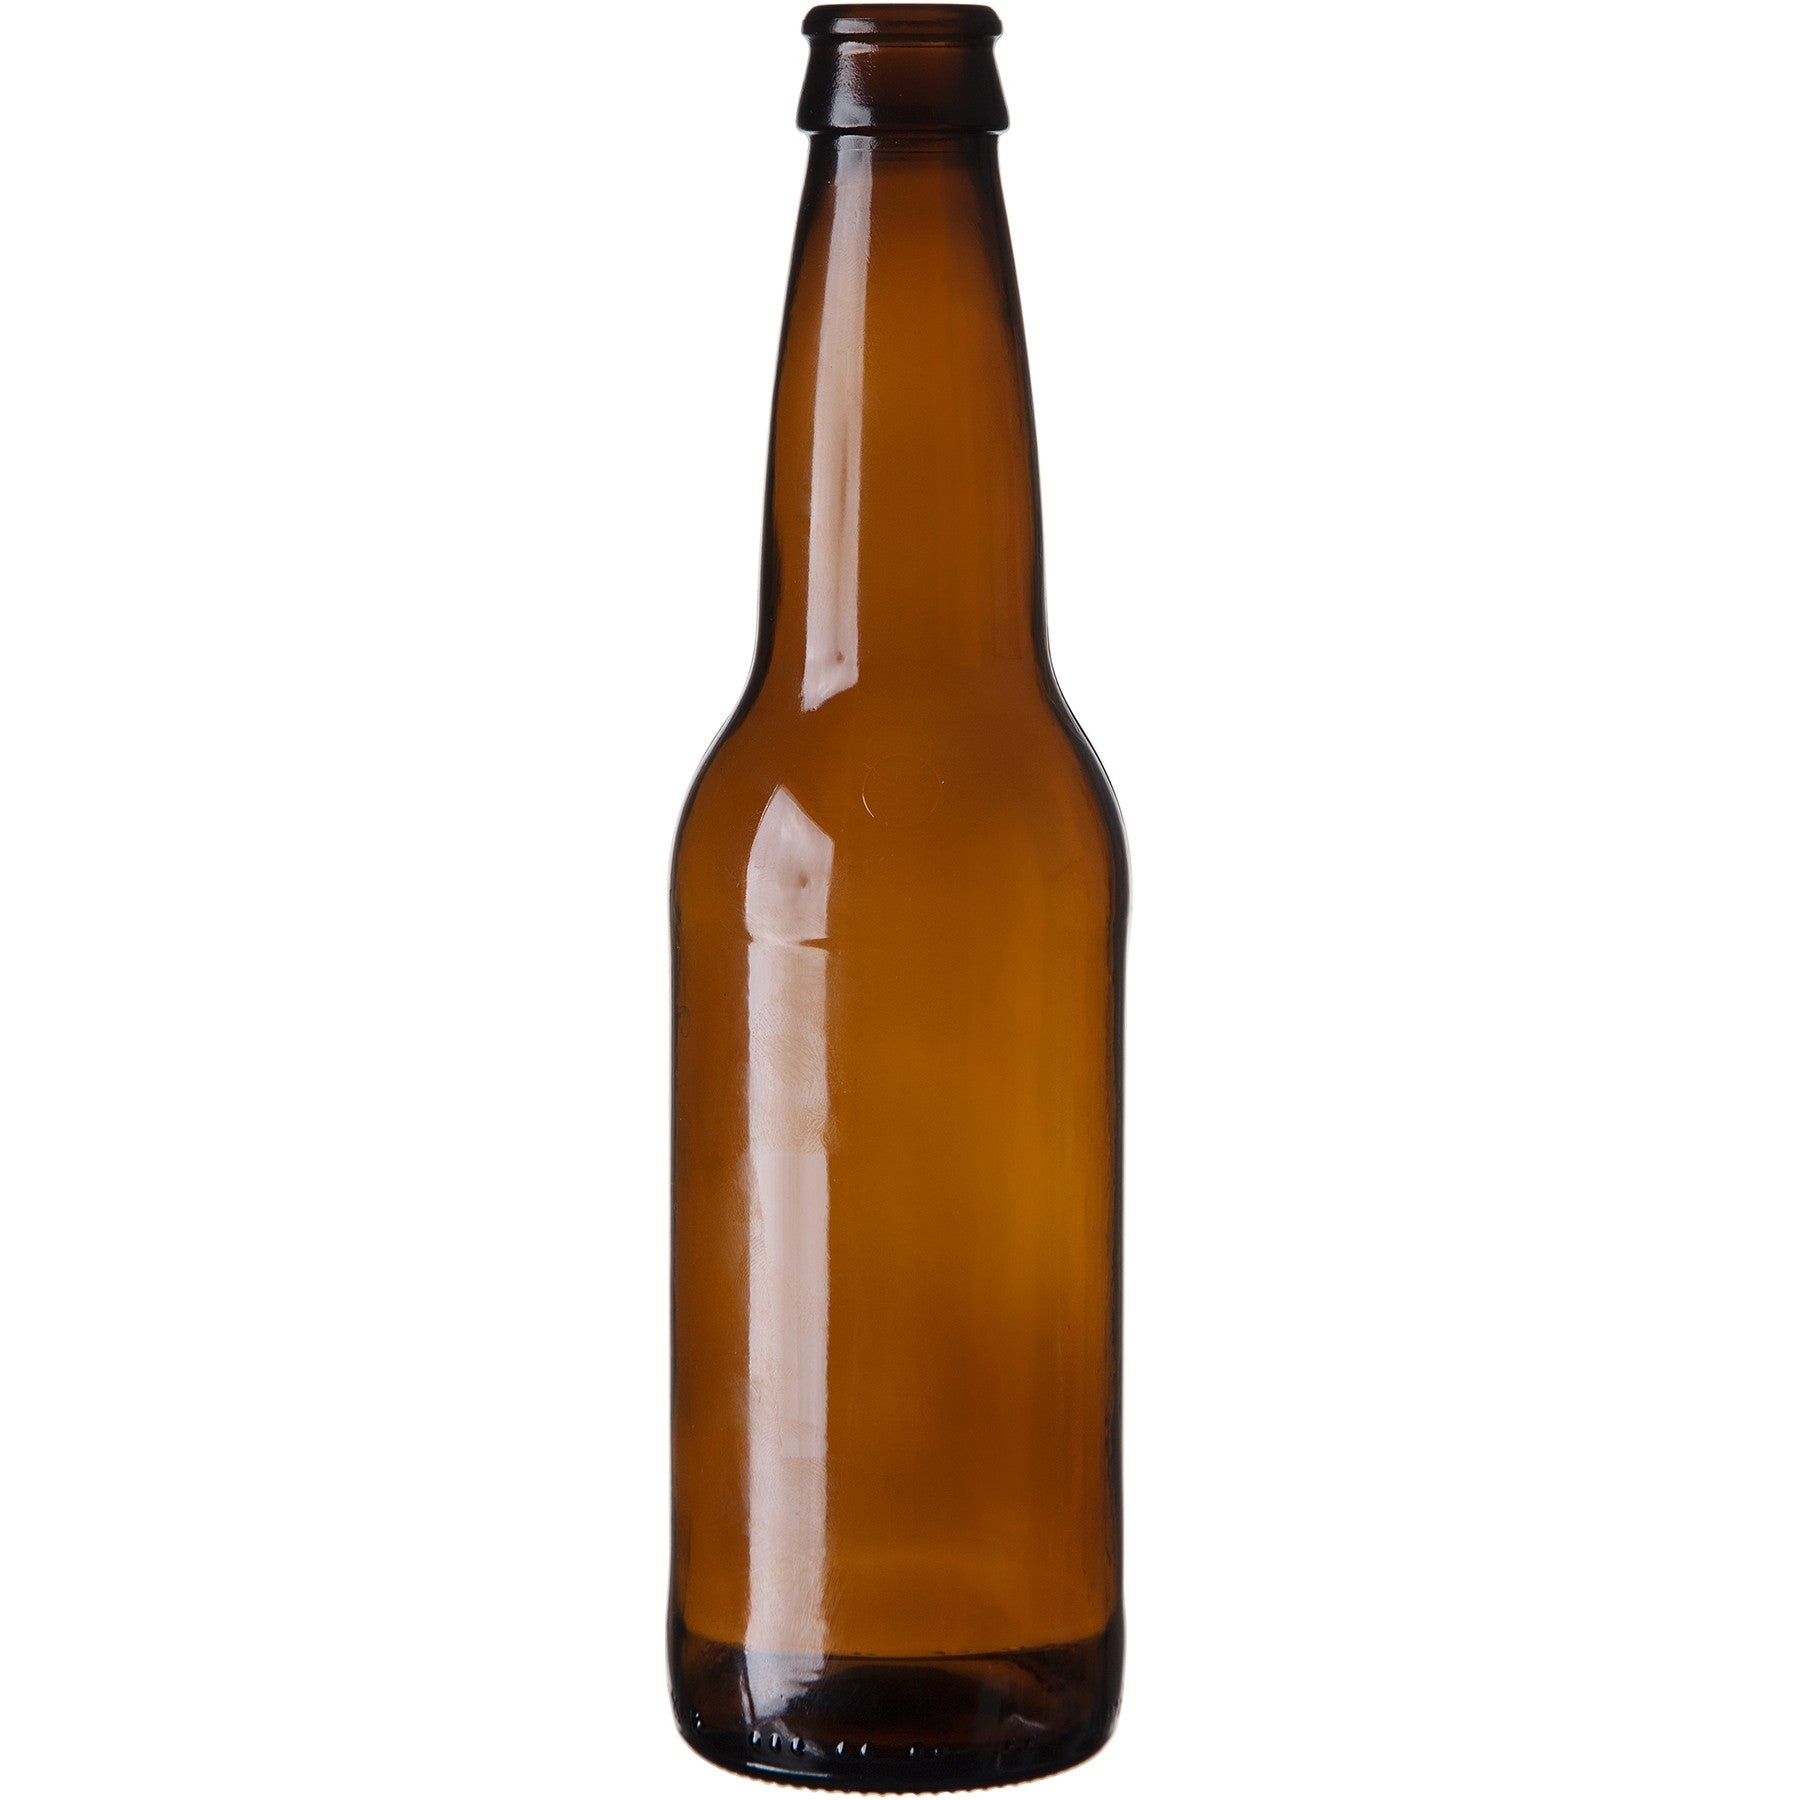 1 Liter Amber EZ Cap Bottles